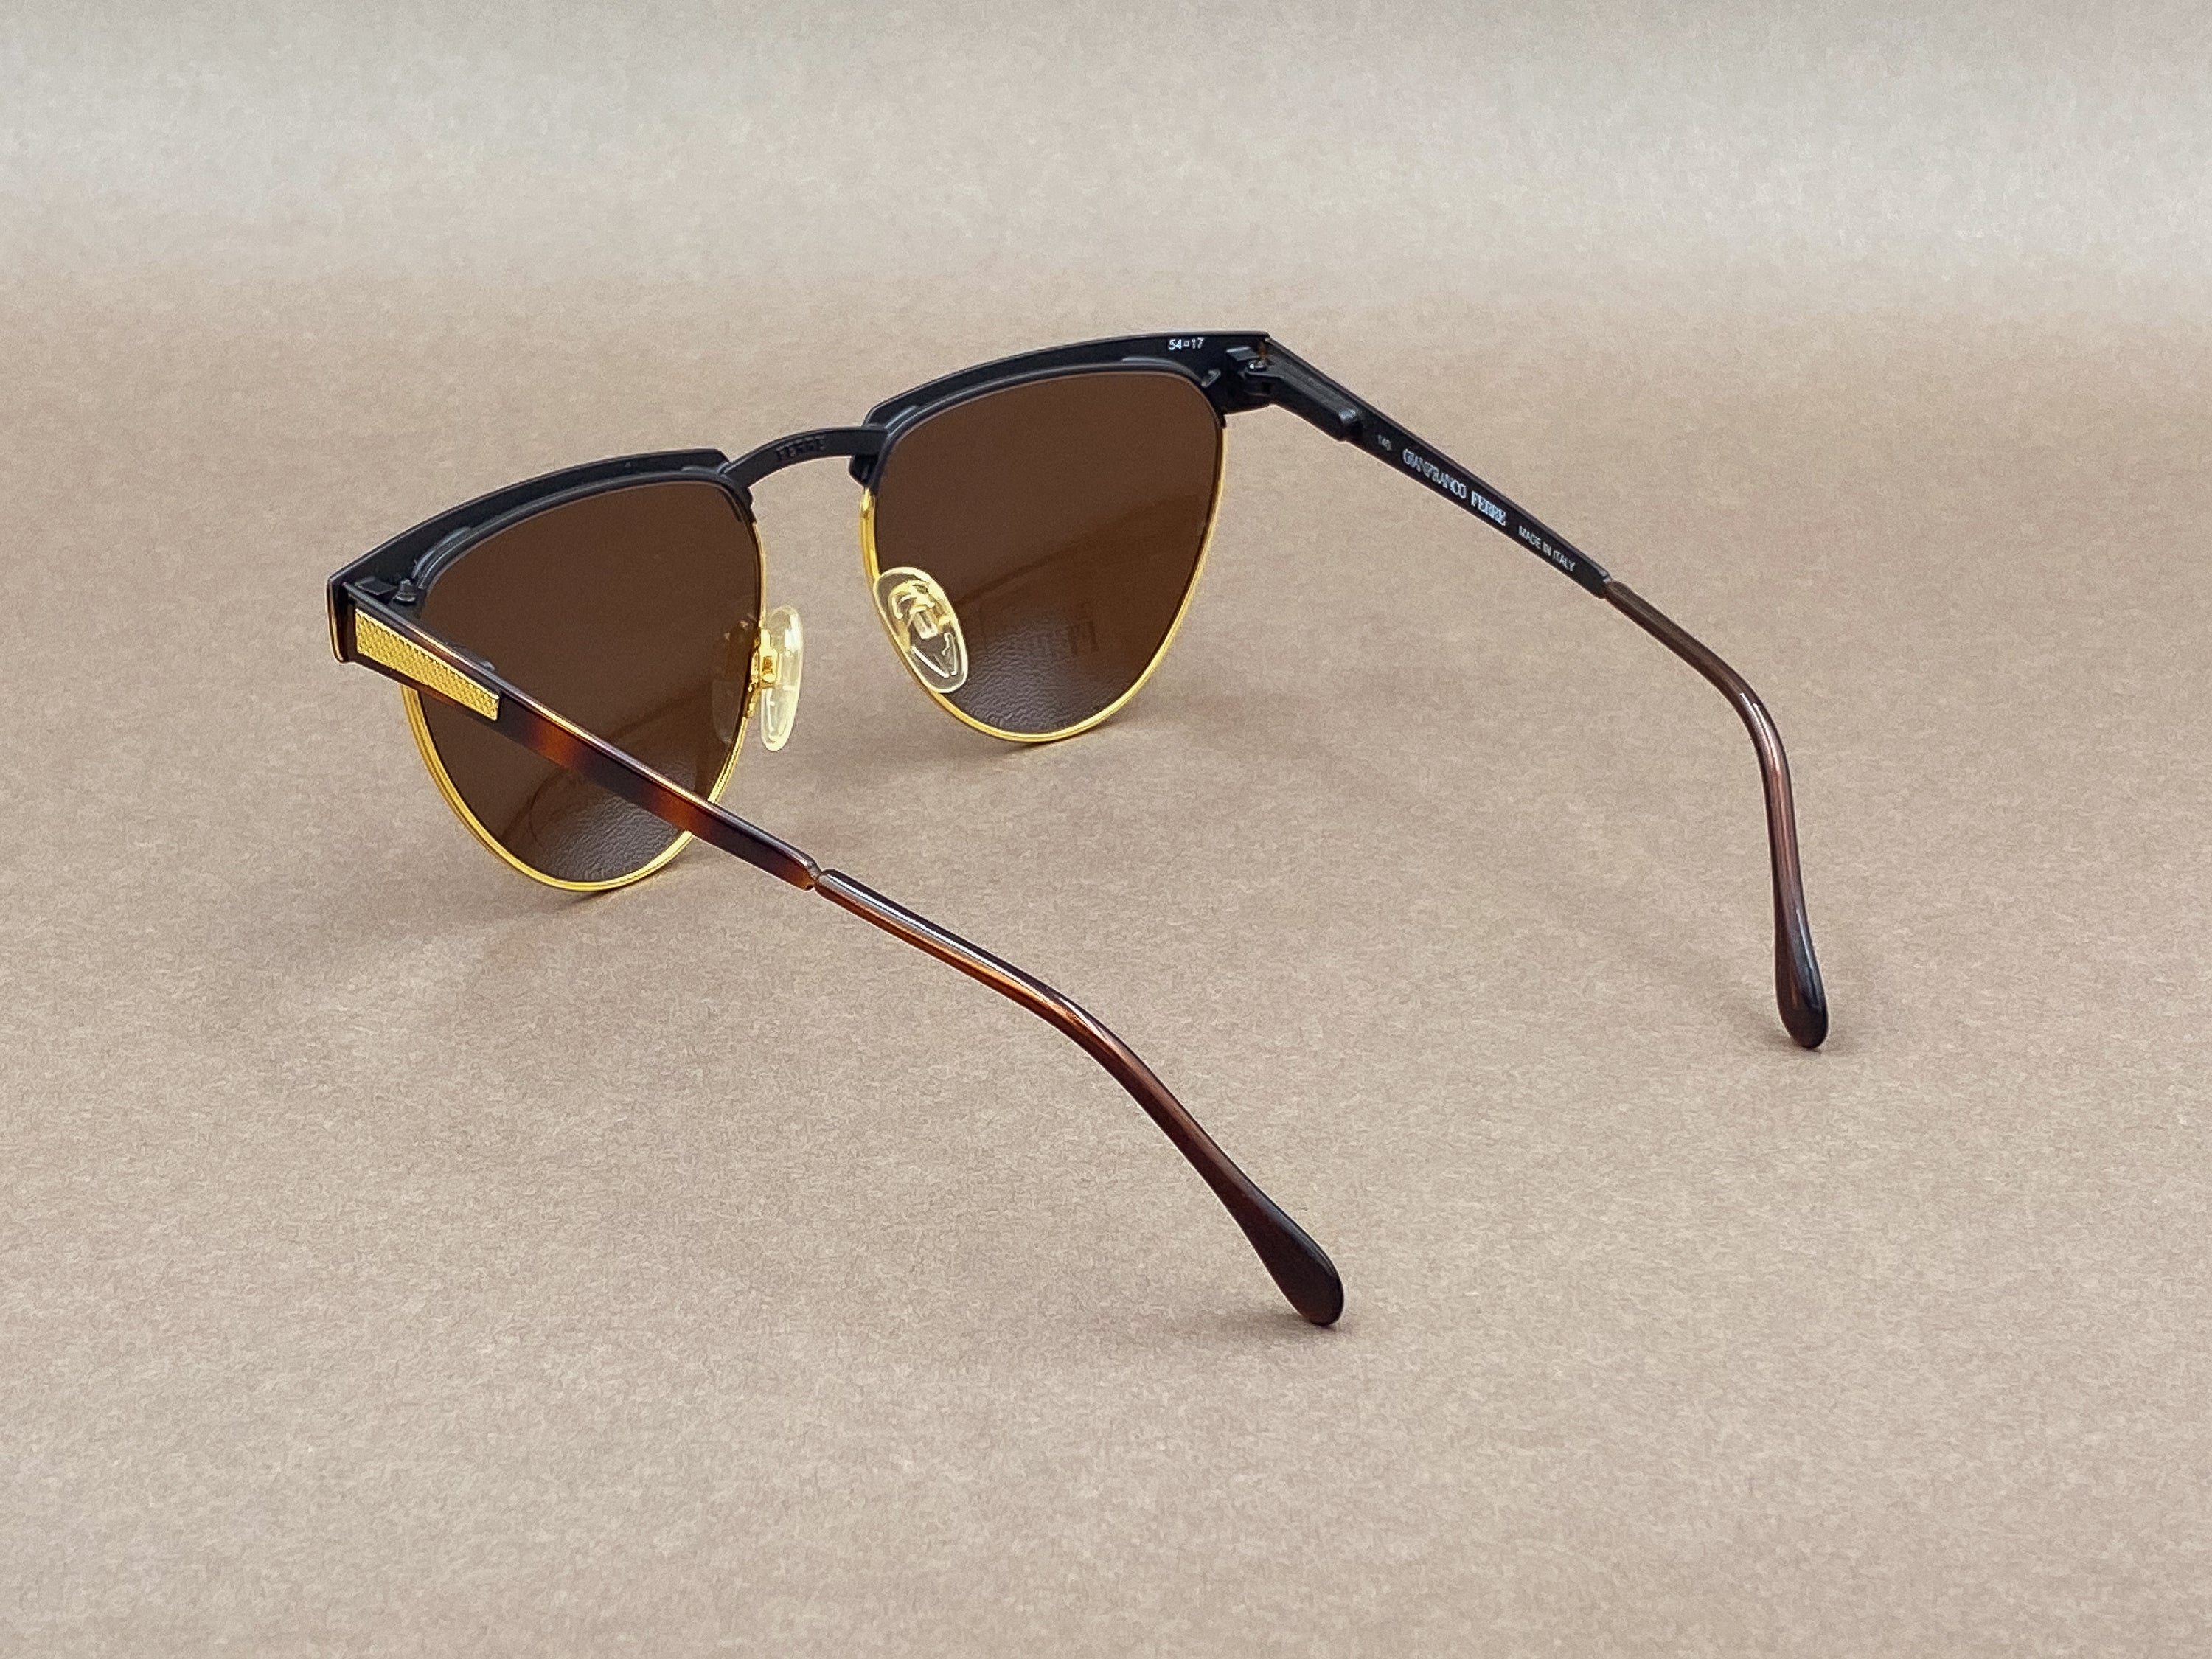 Gianfranco Ferre GFF 87/S sunglasses